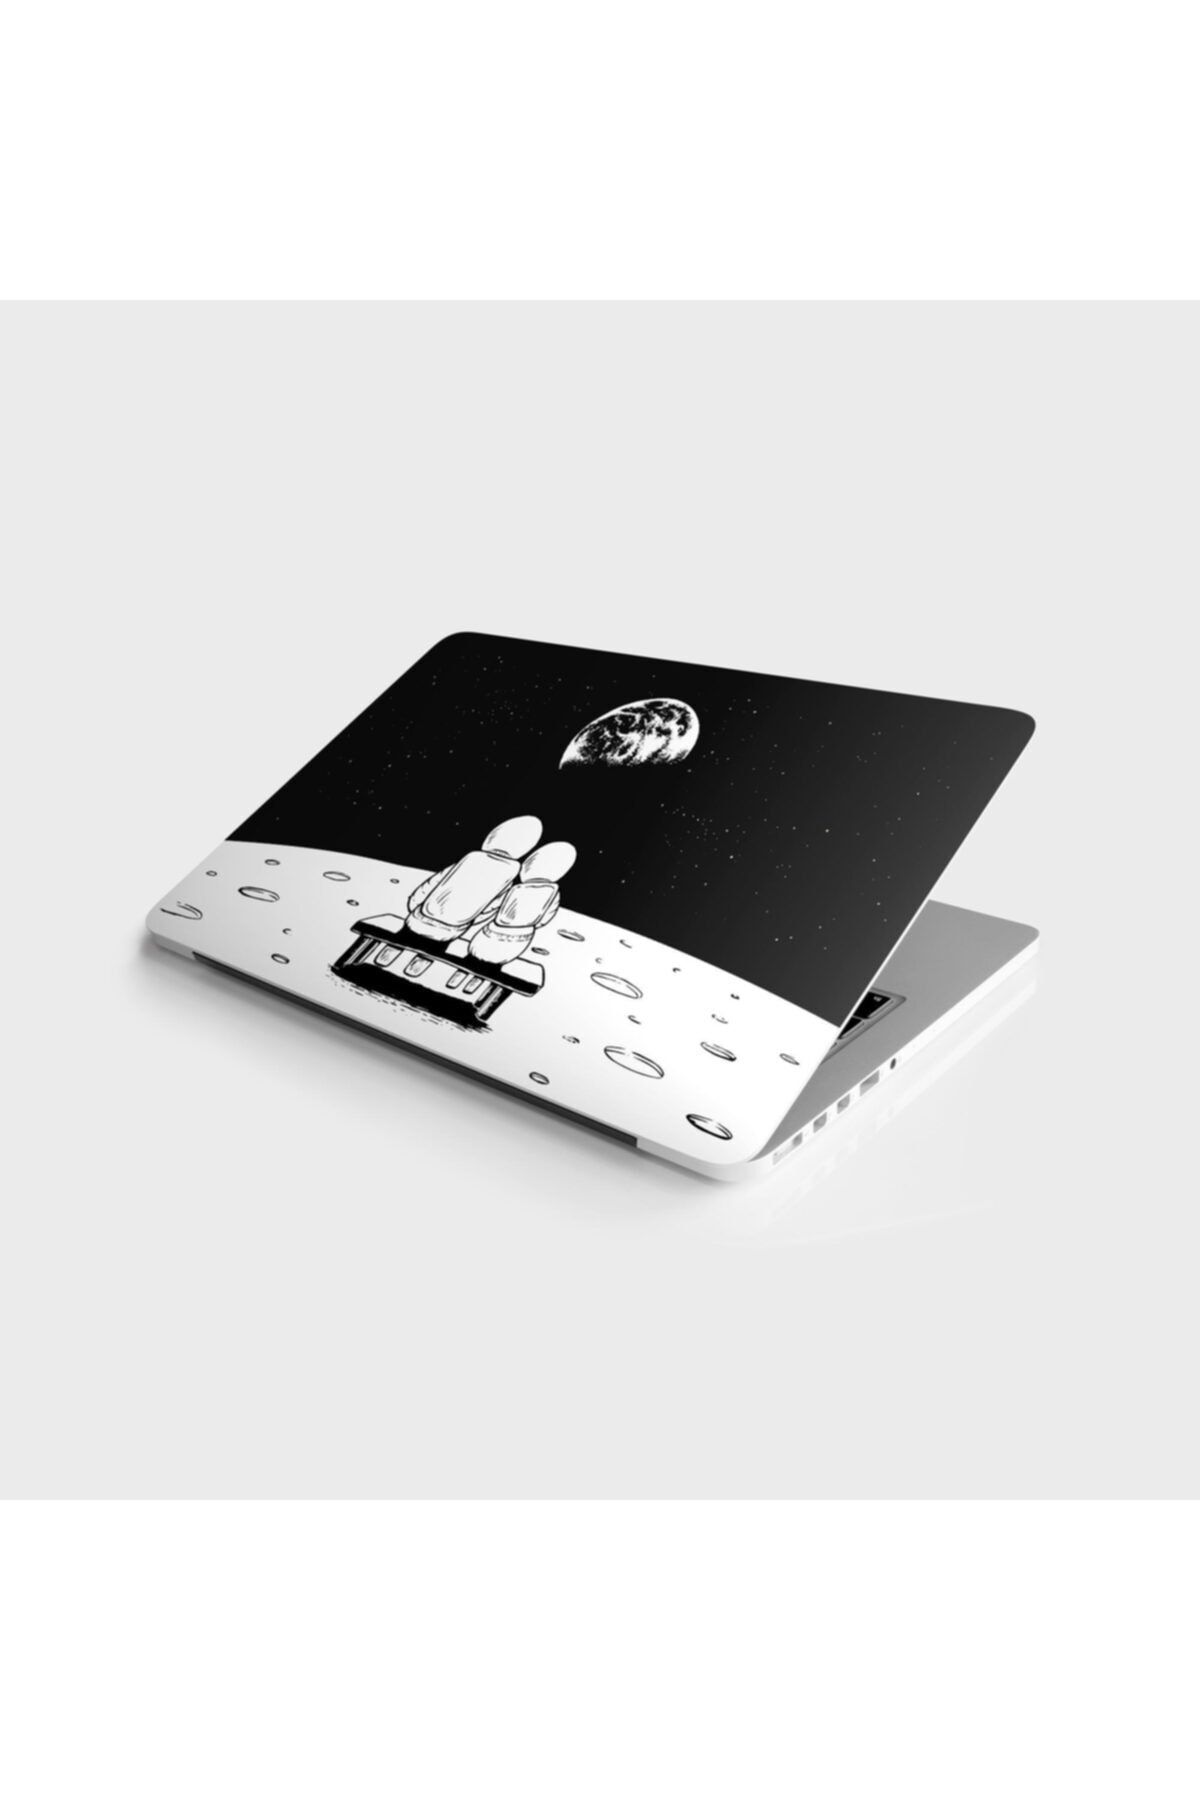 StickerArt Laptop Sticker Bilgisayar Notebook Pc Kaplama Etiketi Dünya Astronot